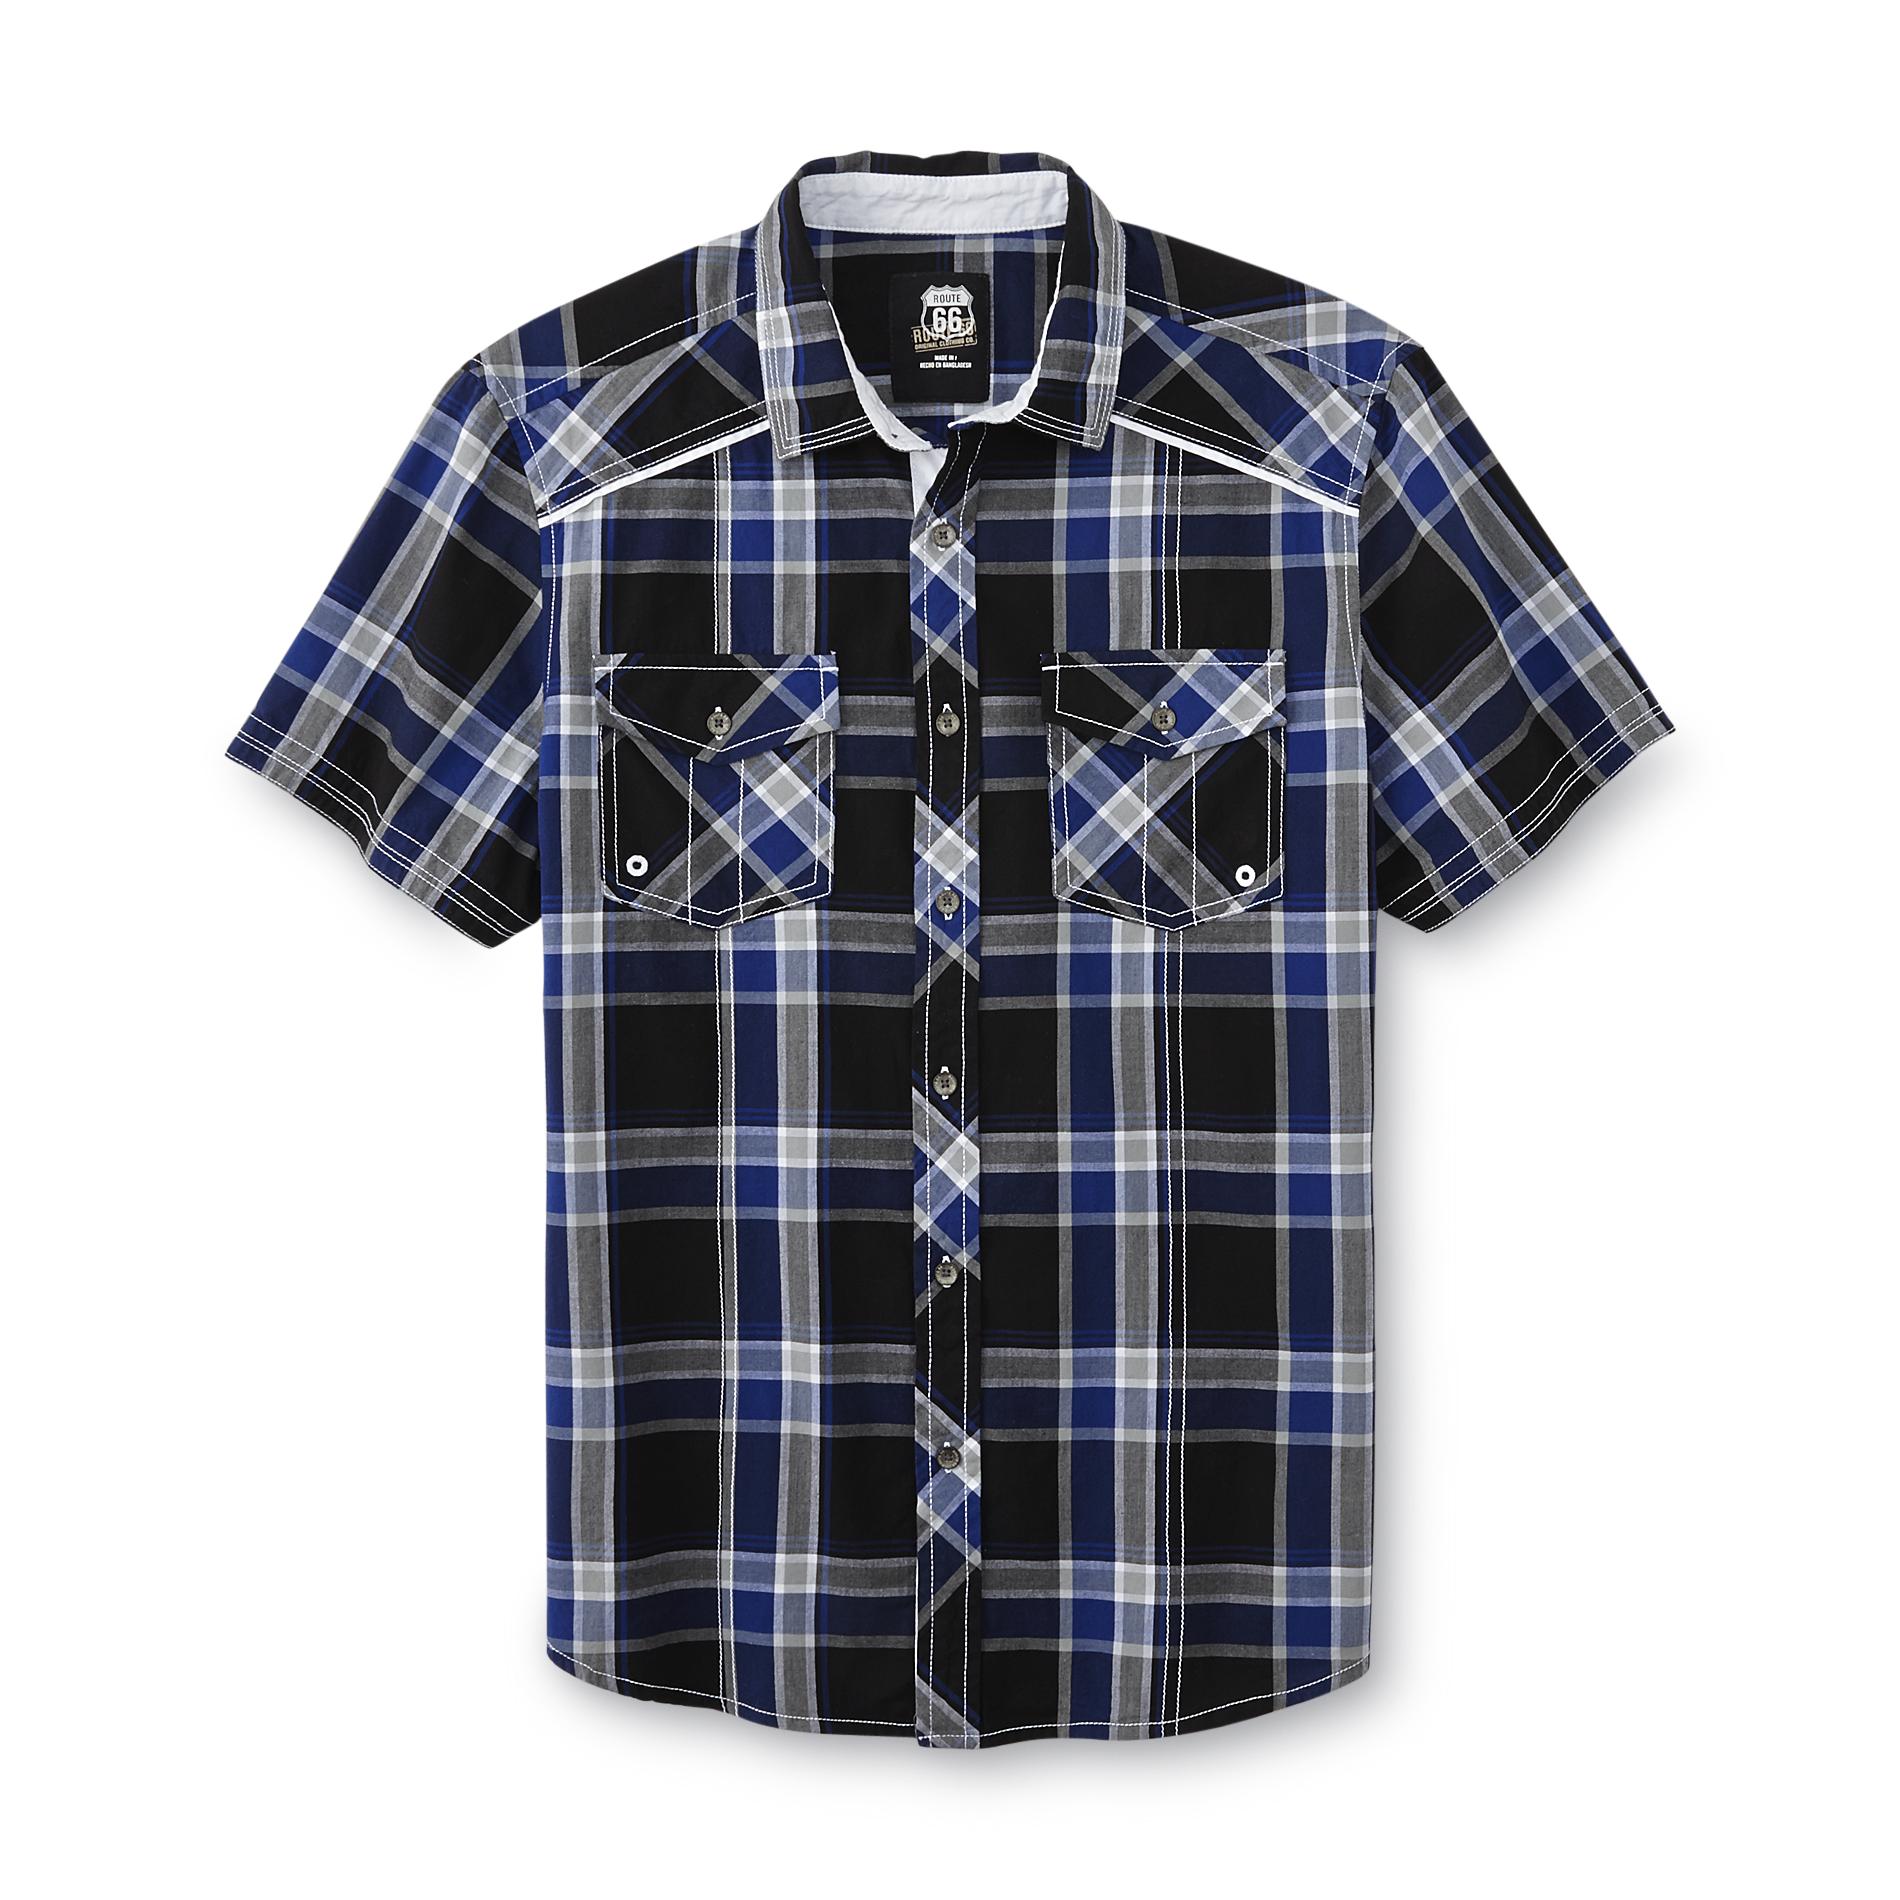 Men's Short-Sleeve Casual Shirt - Plaid